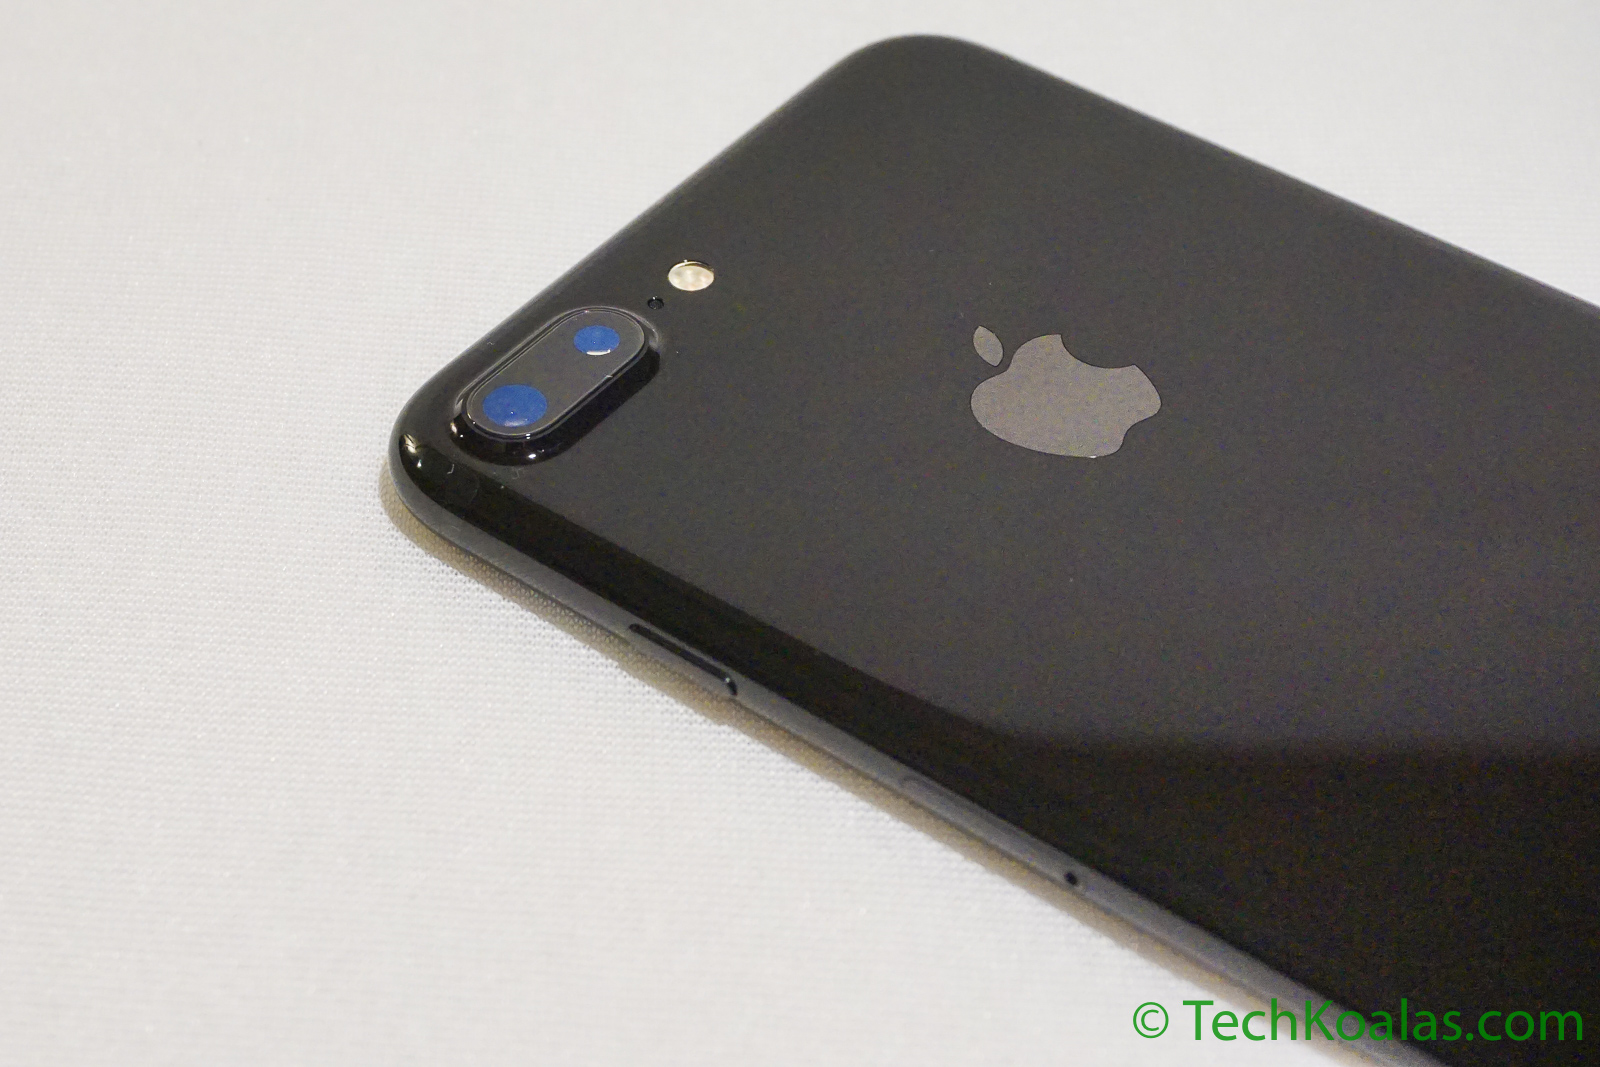 Genuine Apple iPhone 7 Plus Jet Black Box with accessories REF F03 UK model 